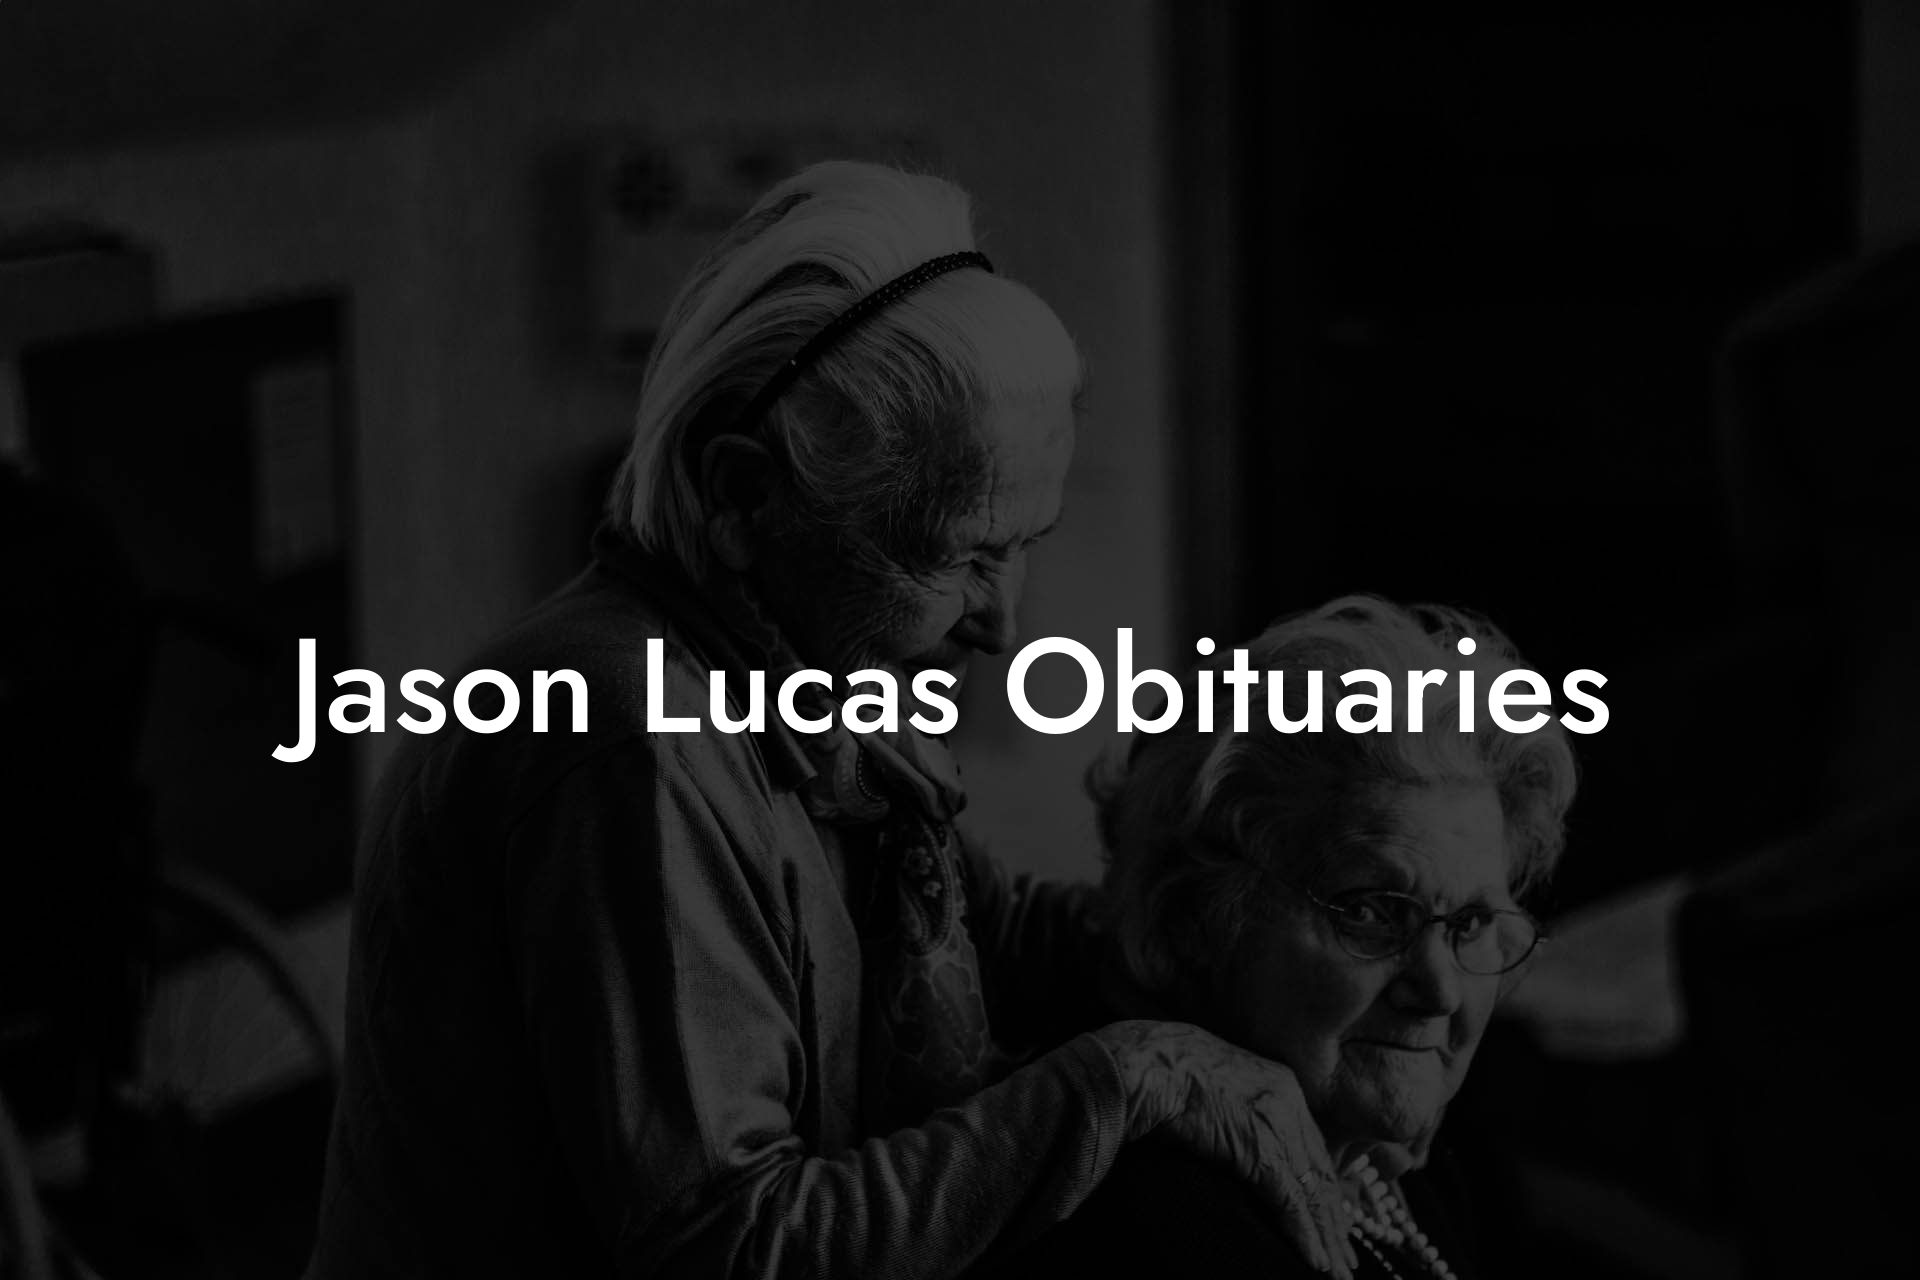 Jason Lucas Obituaries